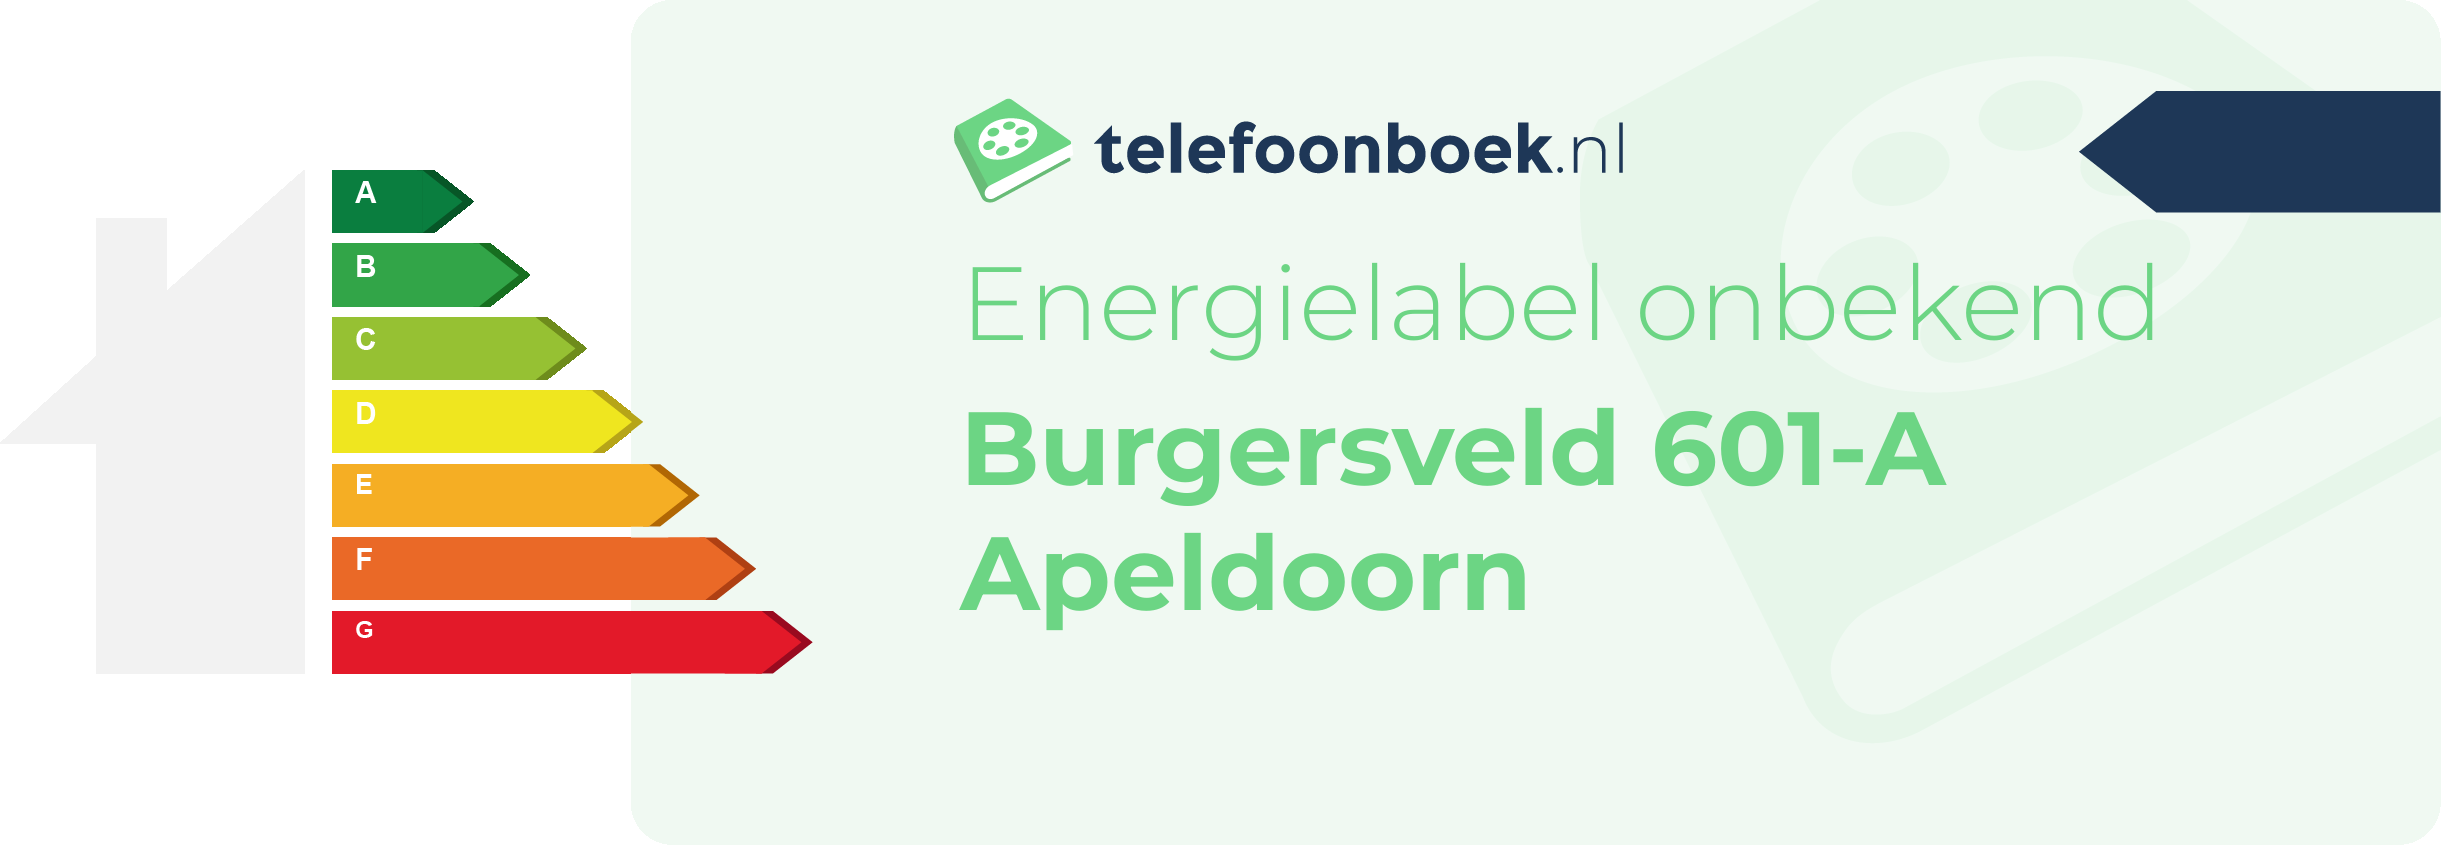 Energielabel Burgersveld 601-A Apeldoorn